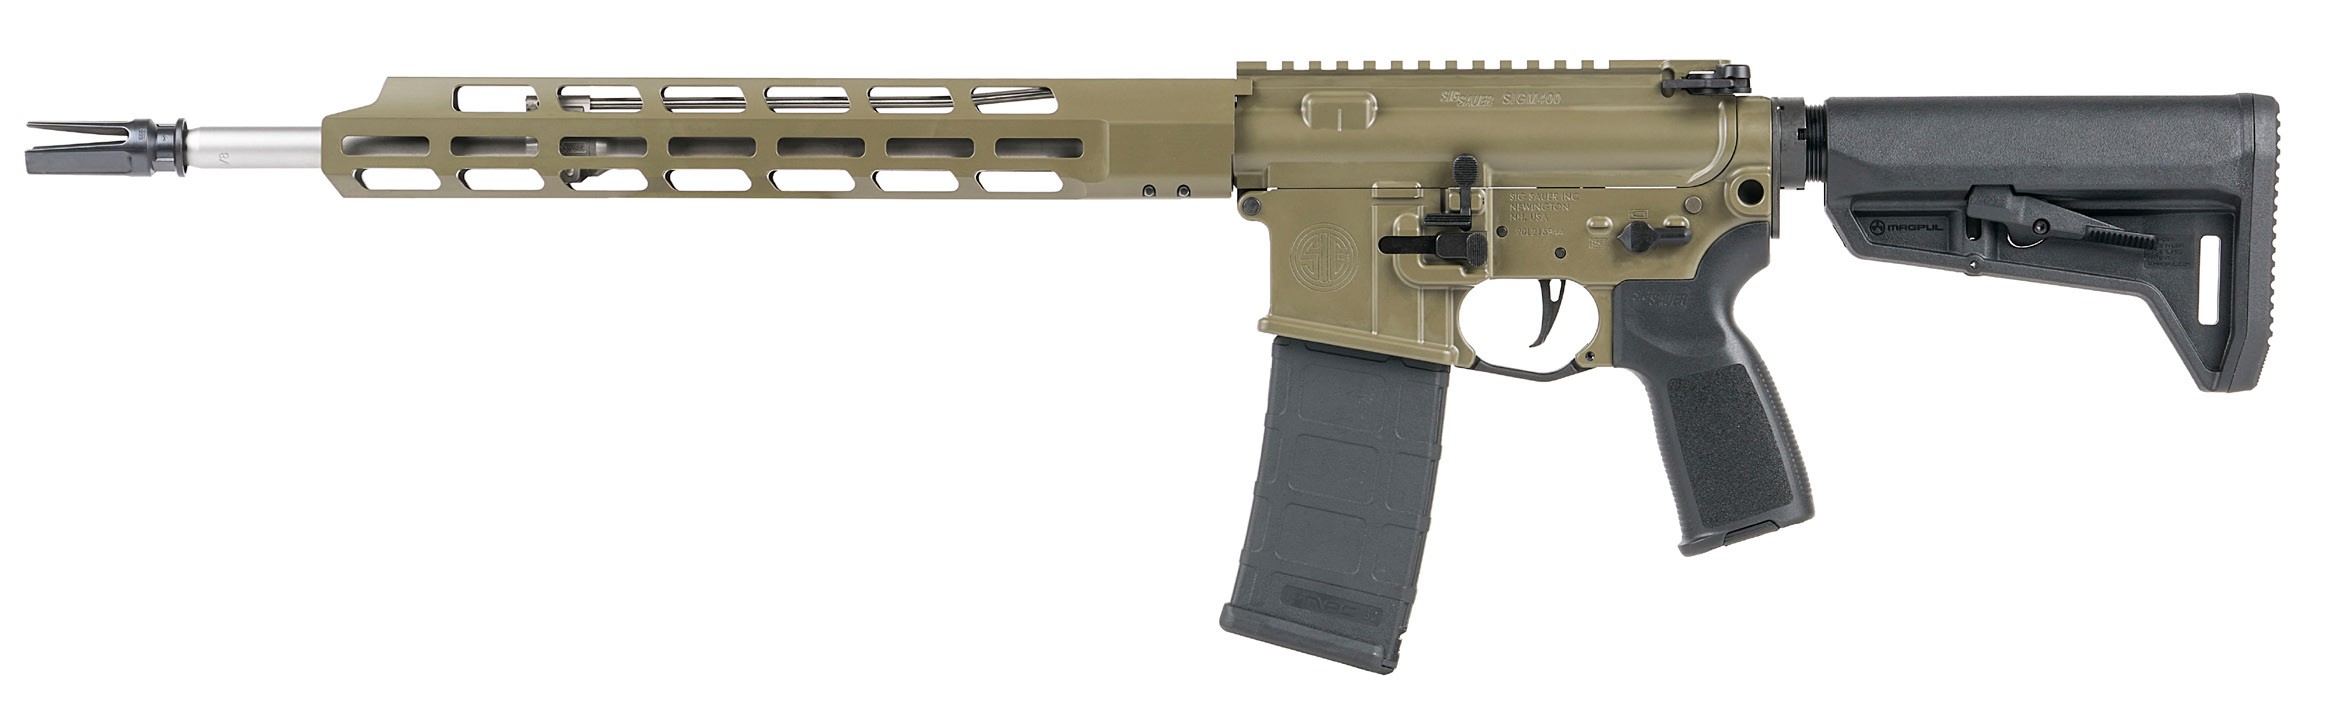 SIG SAUER M400 TREAD V2 5.56MM Rifle with 16-inch barrel, green finish, M-LOK handguard, and 30-round magazine